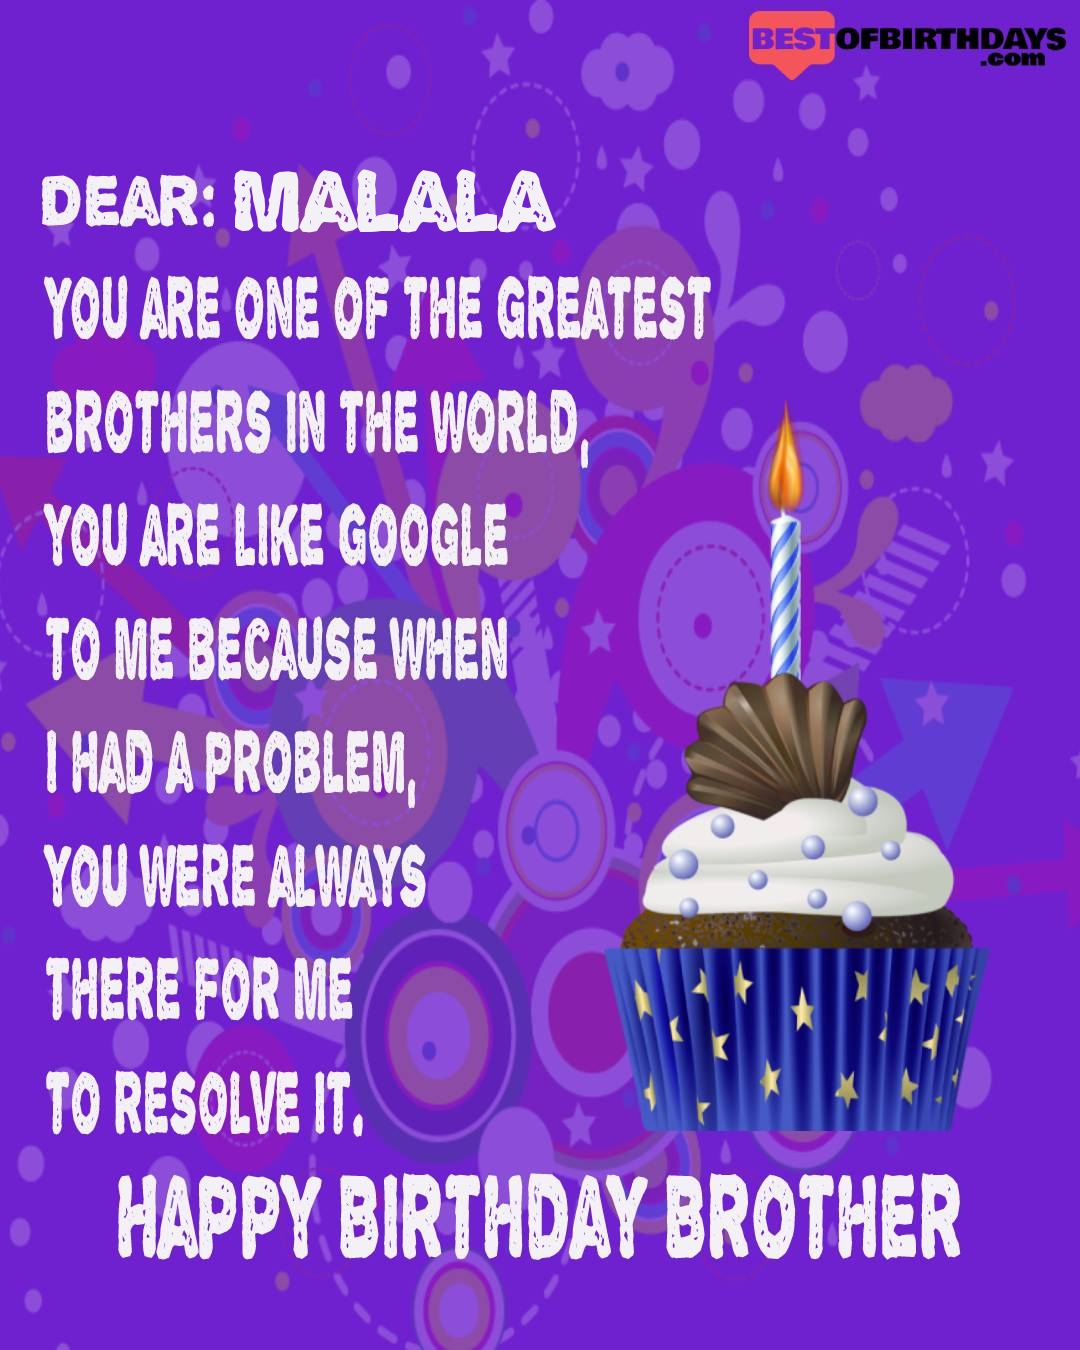 Happy birthday malala bhai brother bro